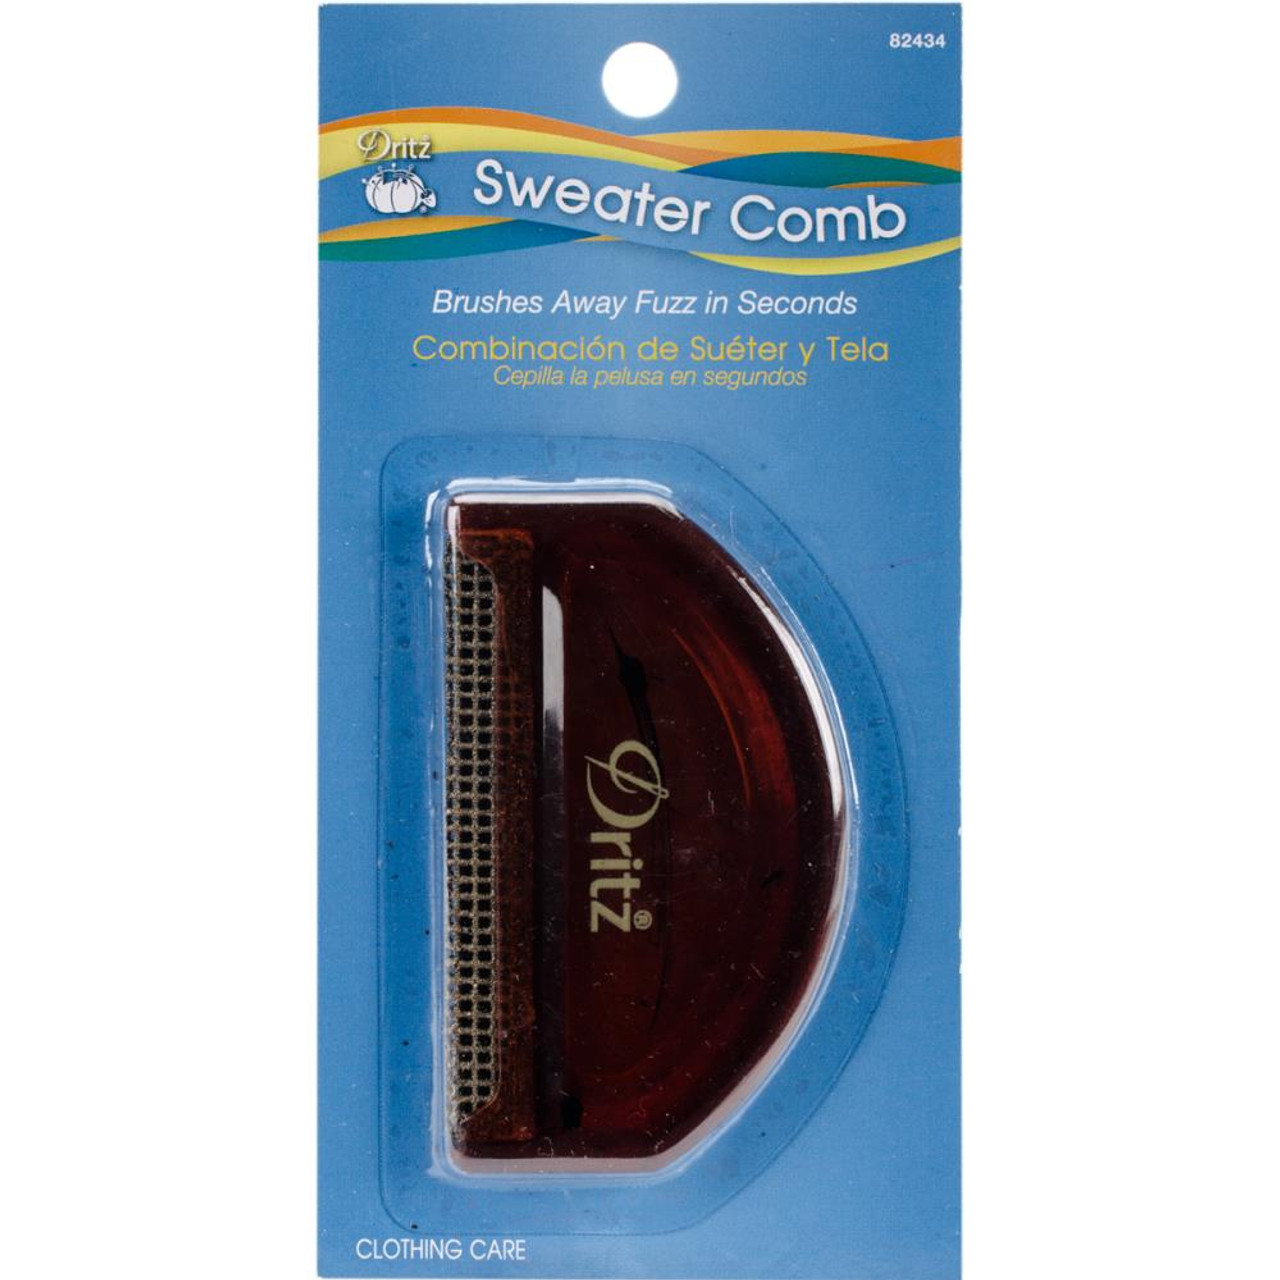 Dritz Sweater Comb – Stitches